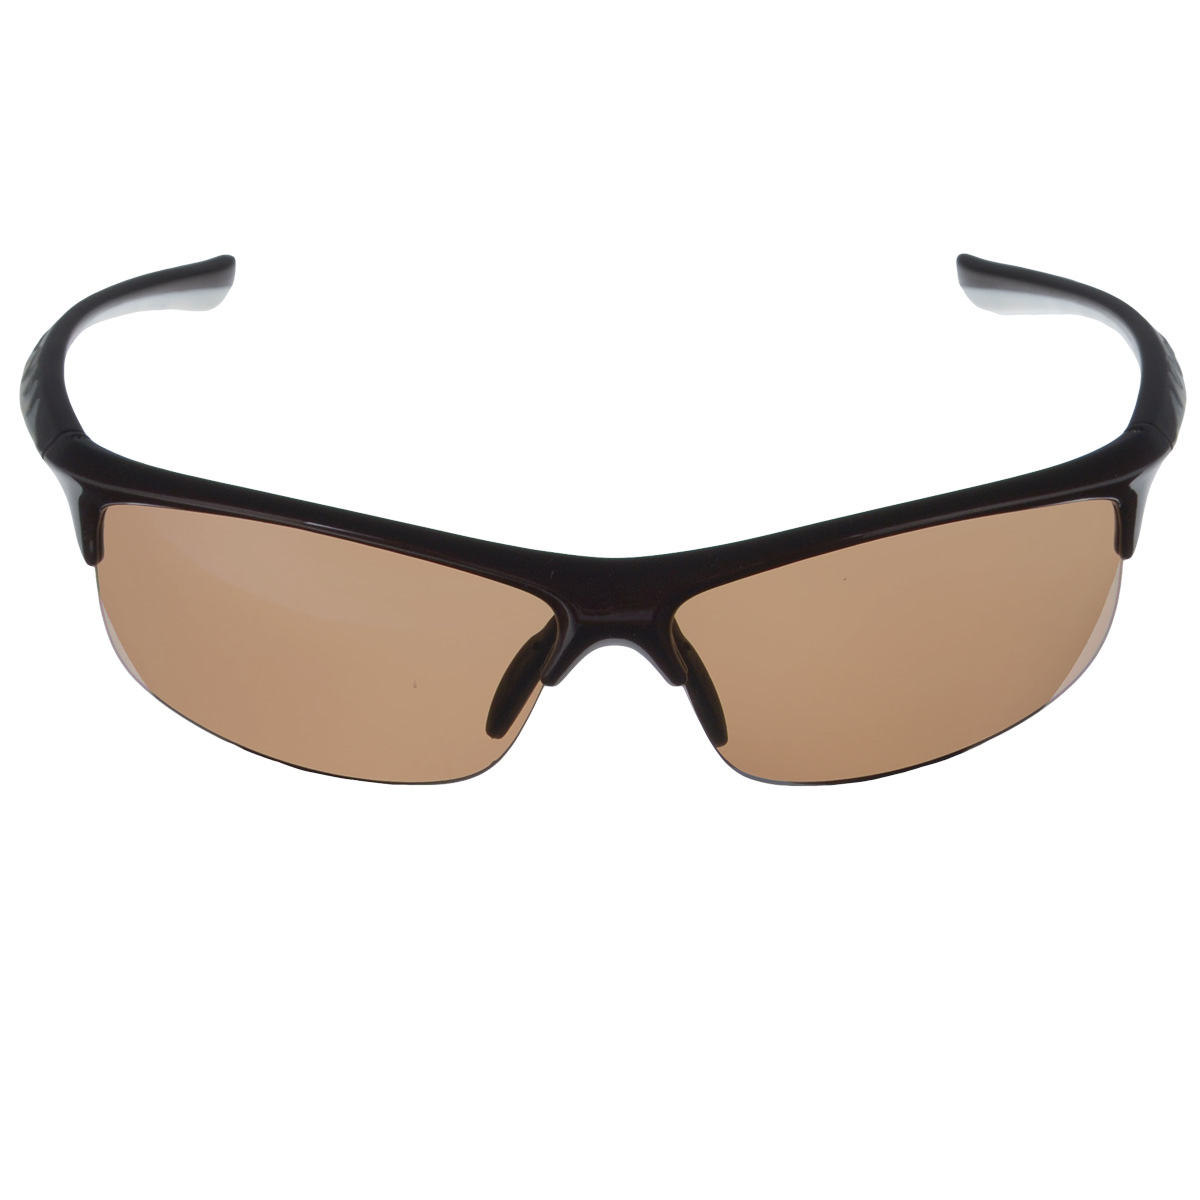 SP Glasses AS021 Premium, Chocolate White водительские очки темные